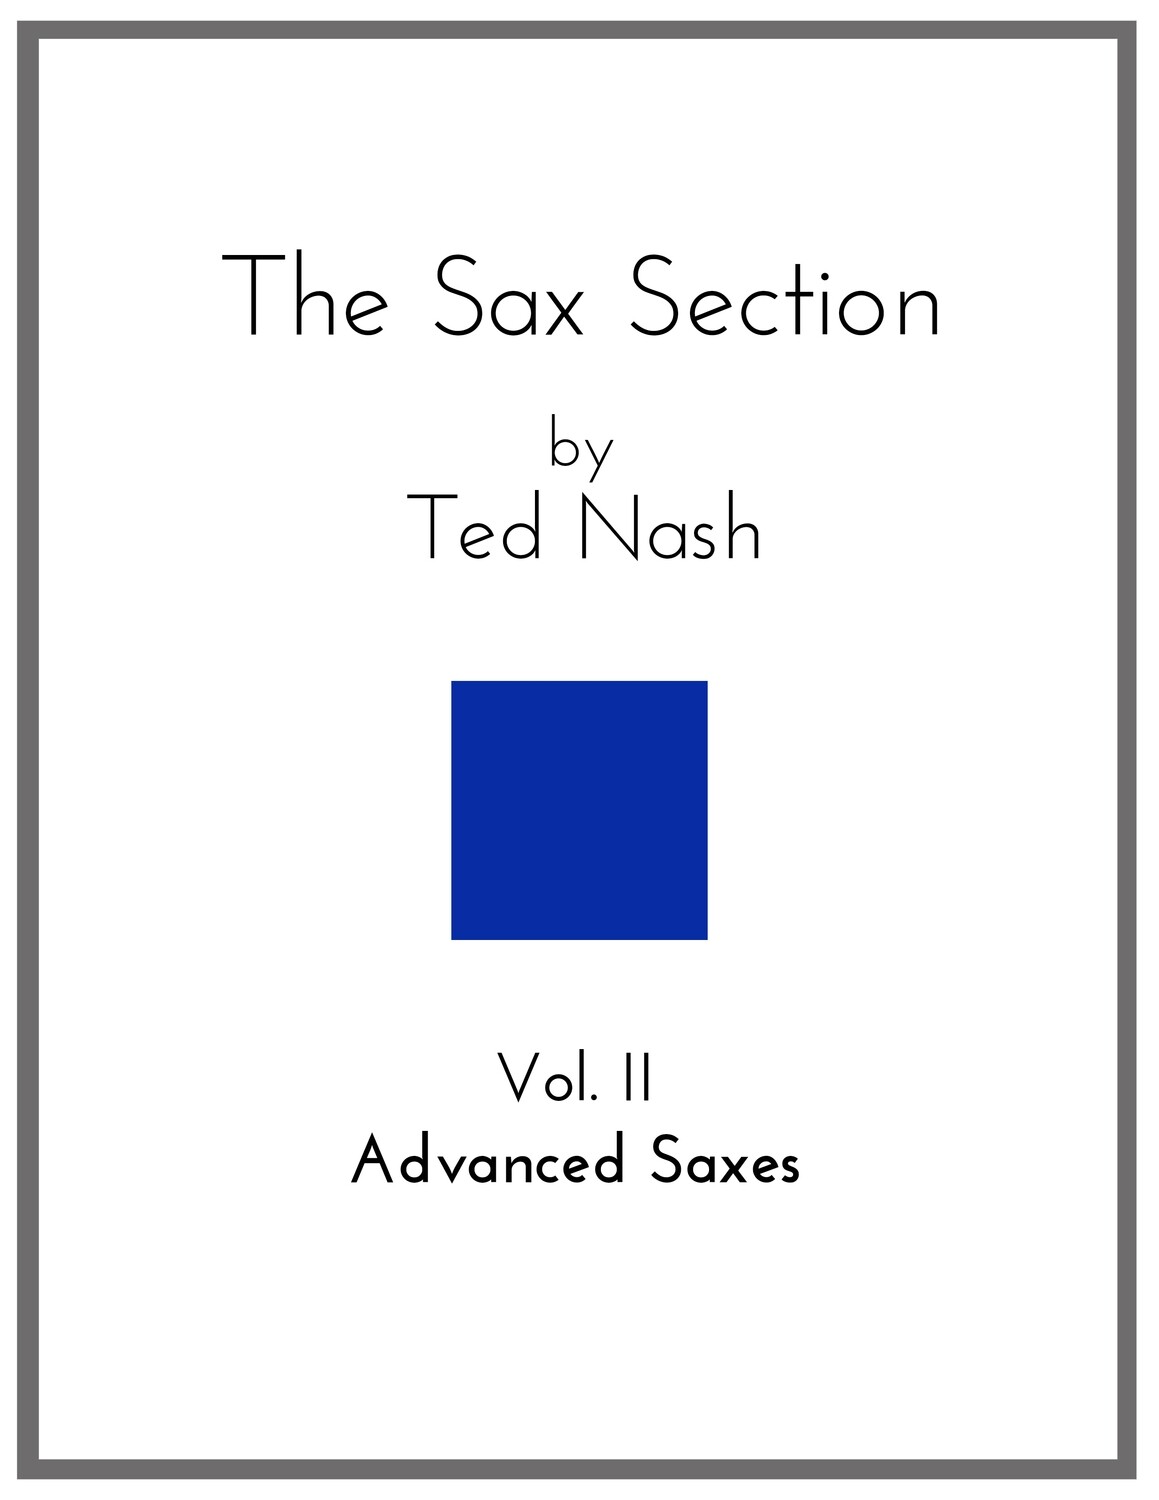 The Sax Section - Vol. II, Advanced